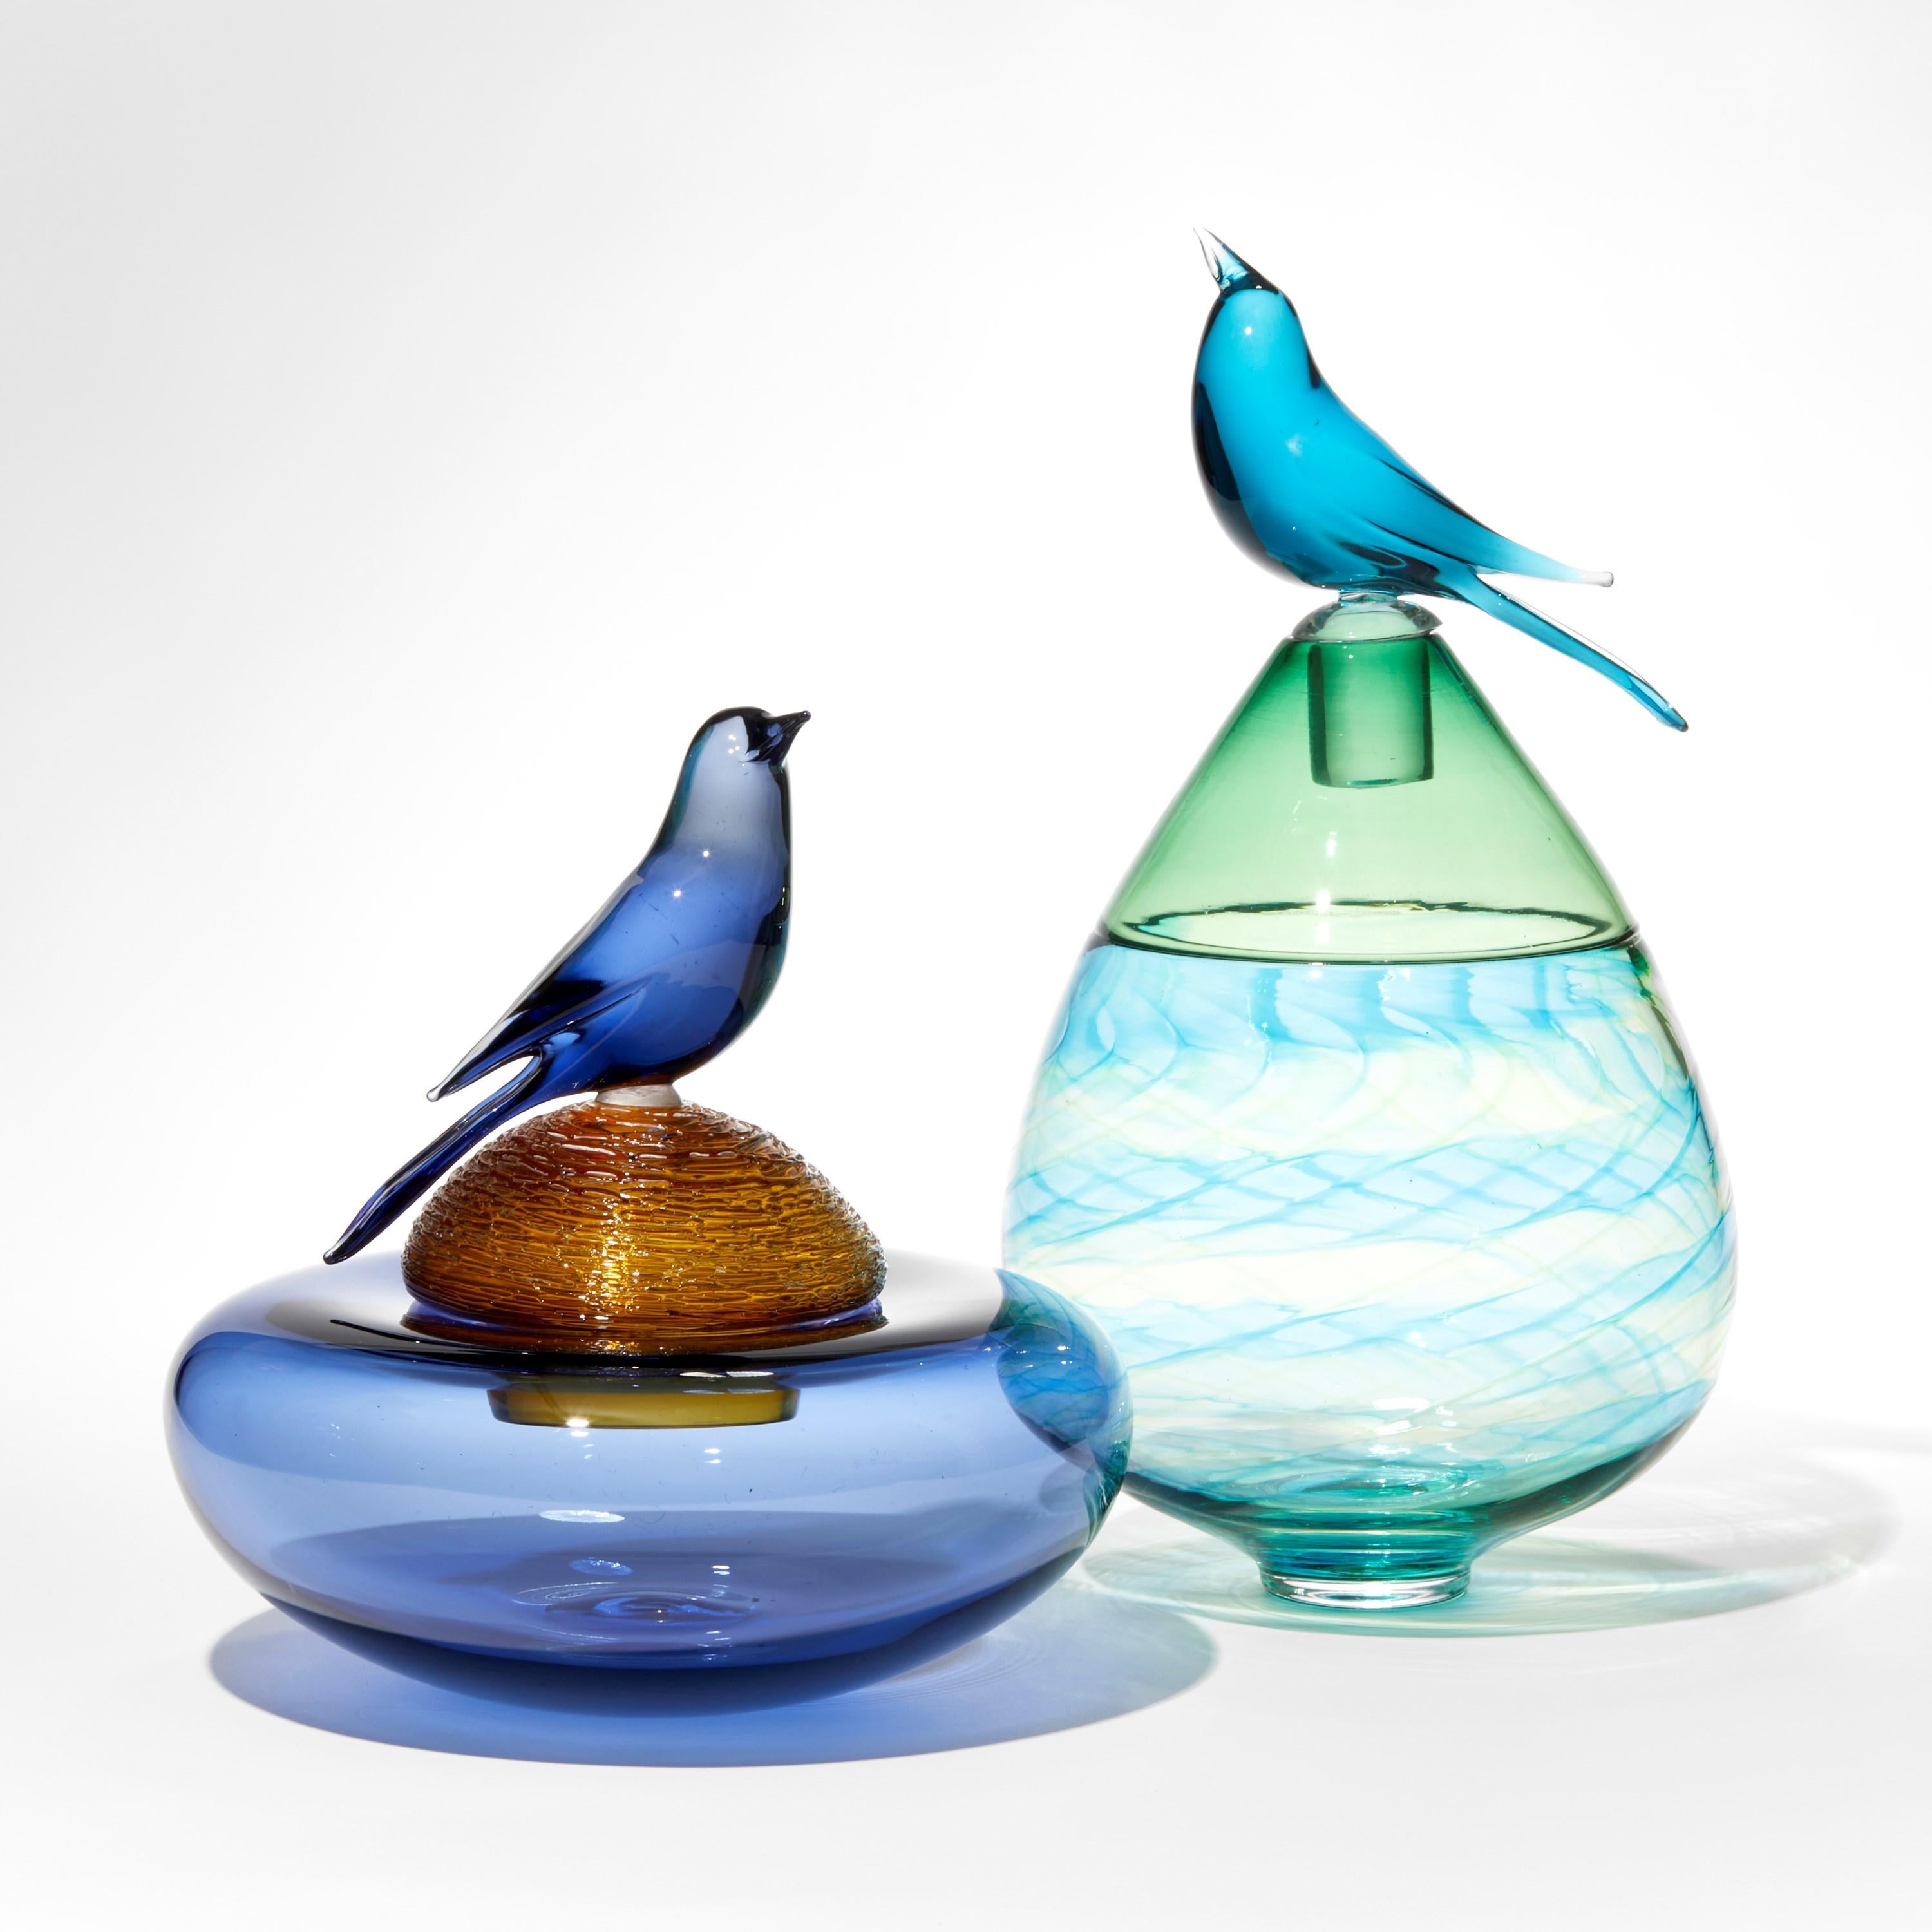 French All About Birds XVII, a rich blue & amber glass bird sculpture by Julie Johnson